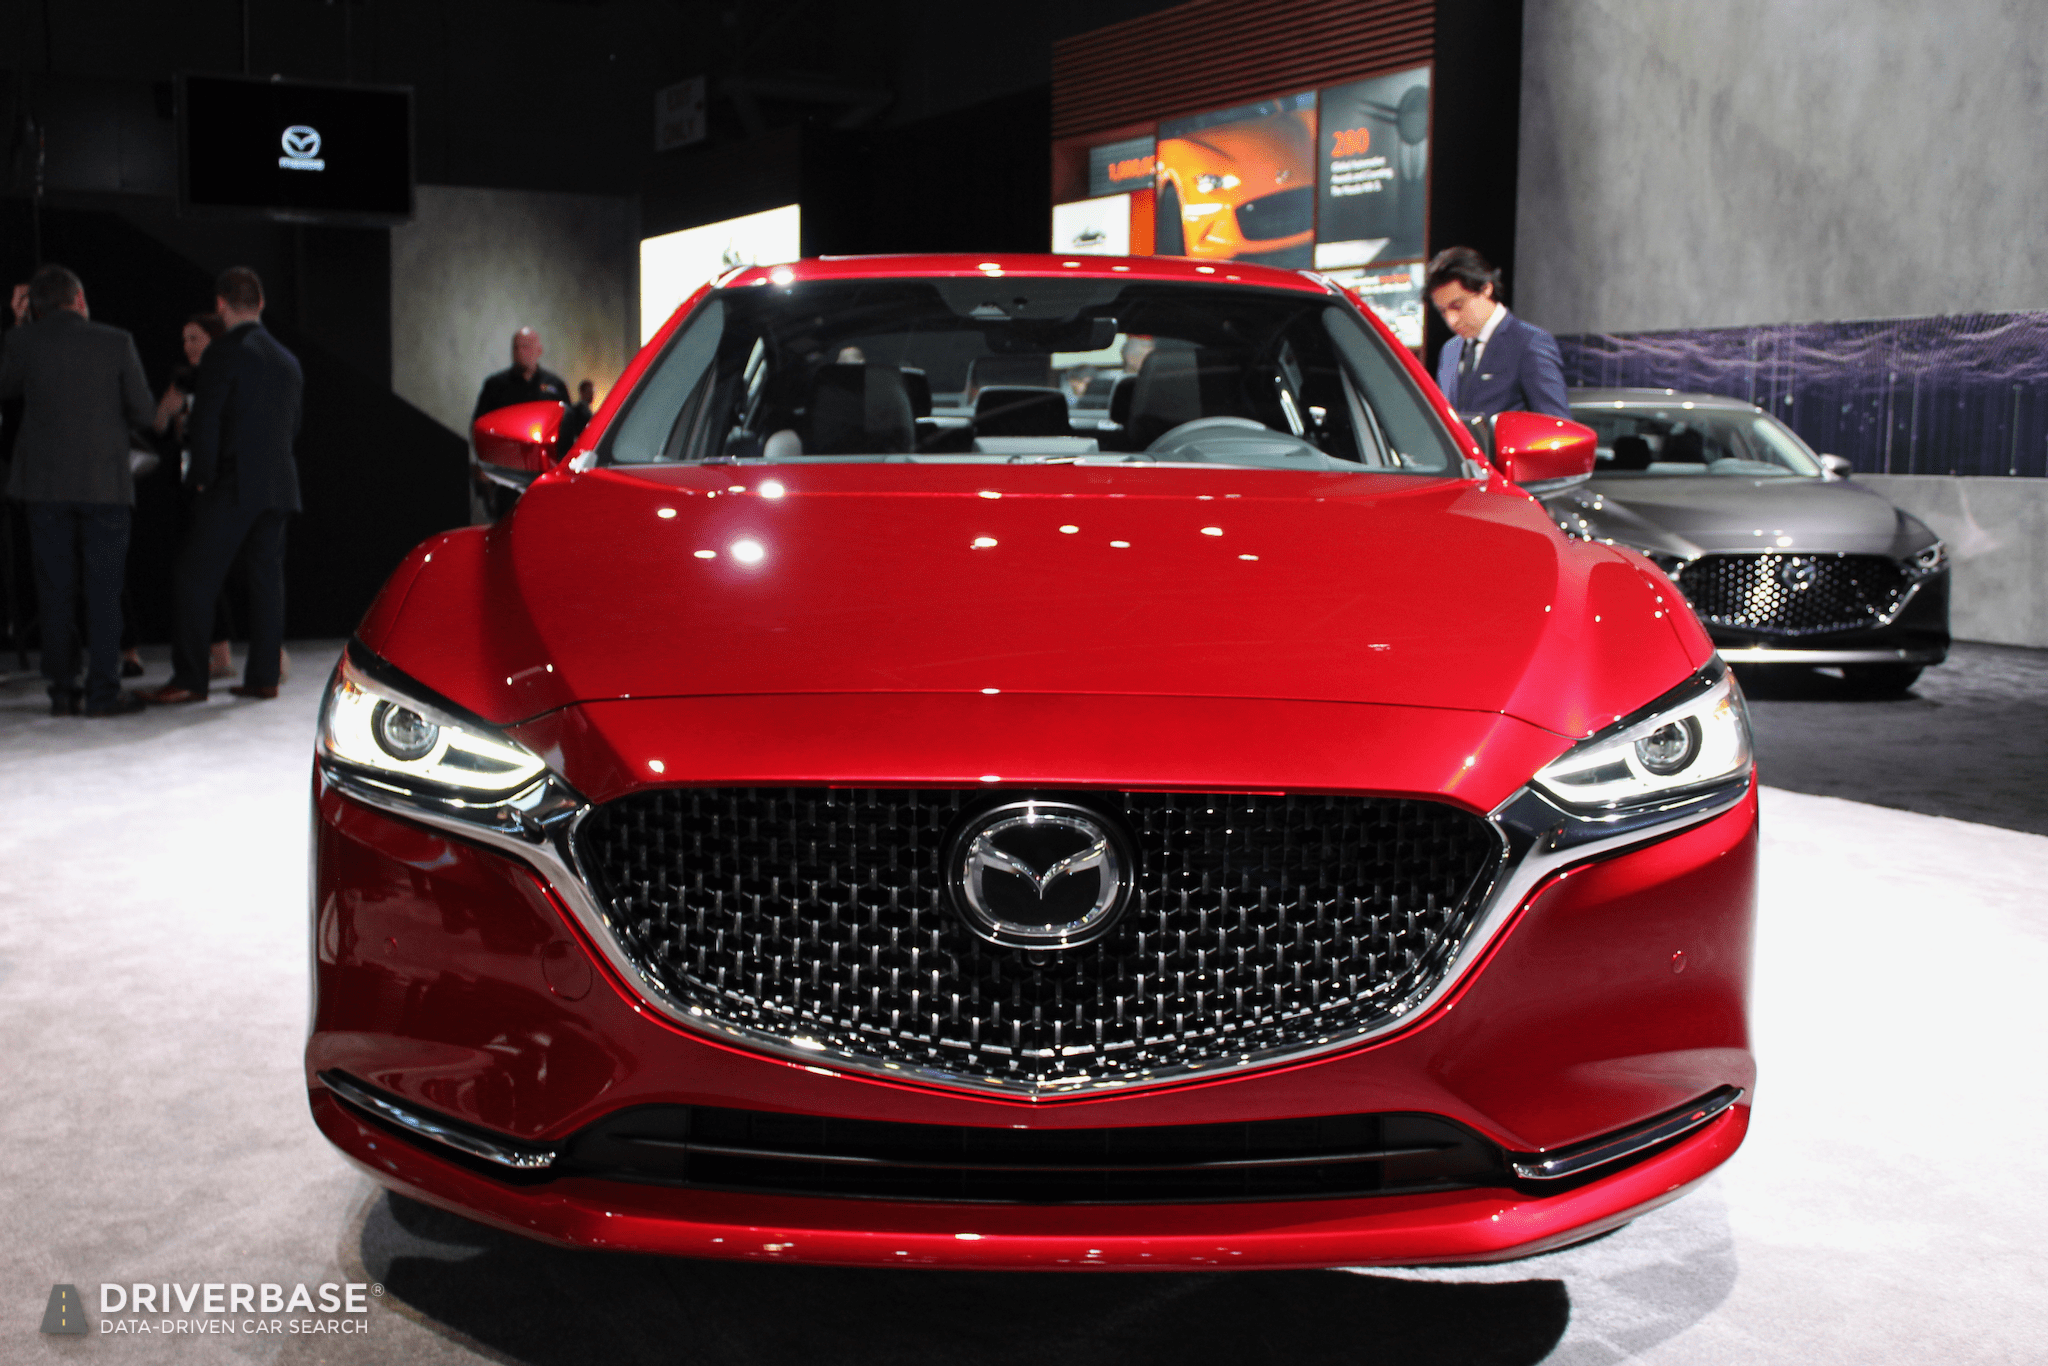 2020 Mazda 6 at the 2019 New York Auto Show – Driverbase